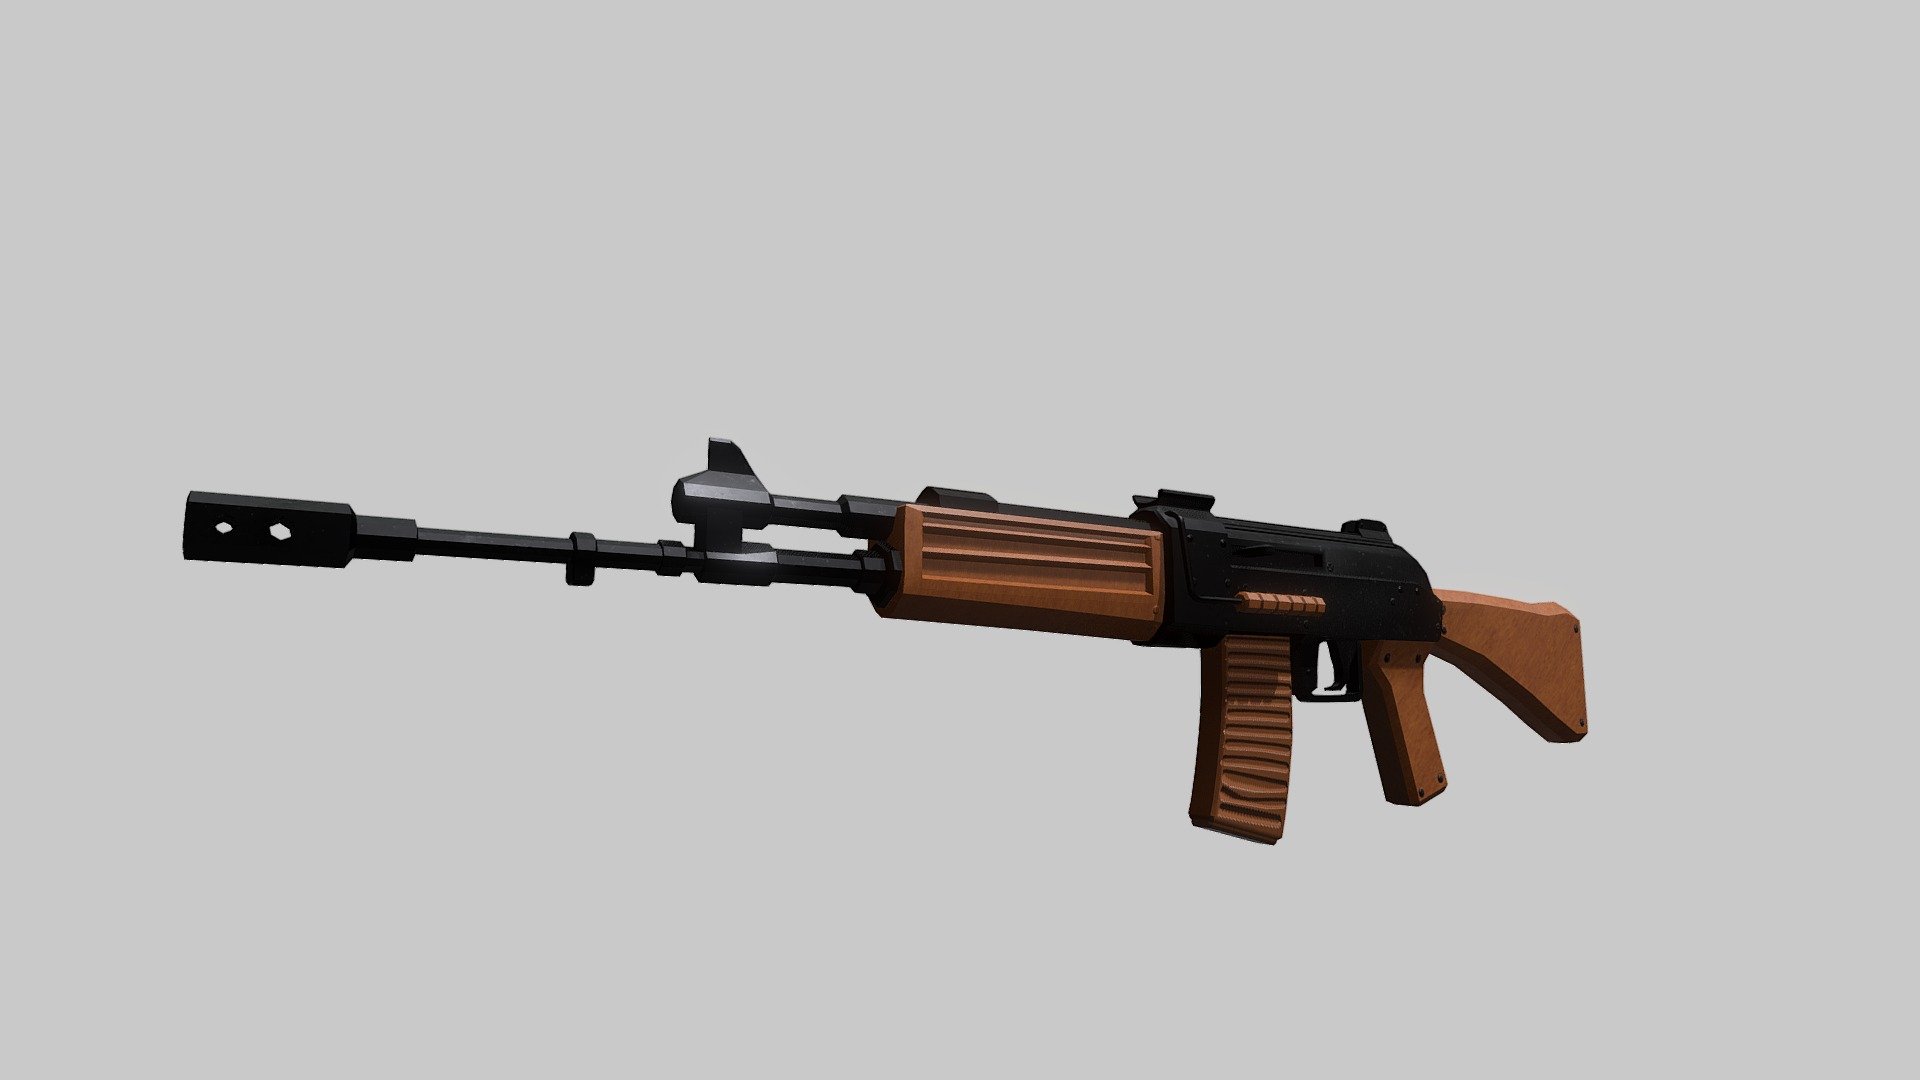 Fictional Assault Rifle based on Insas - Fictional Assault Rifle Insas - 3D model by crispyghouls 3d model